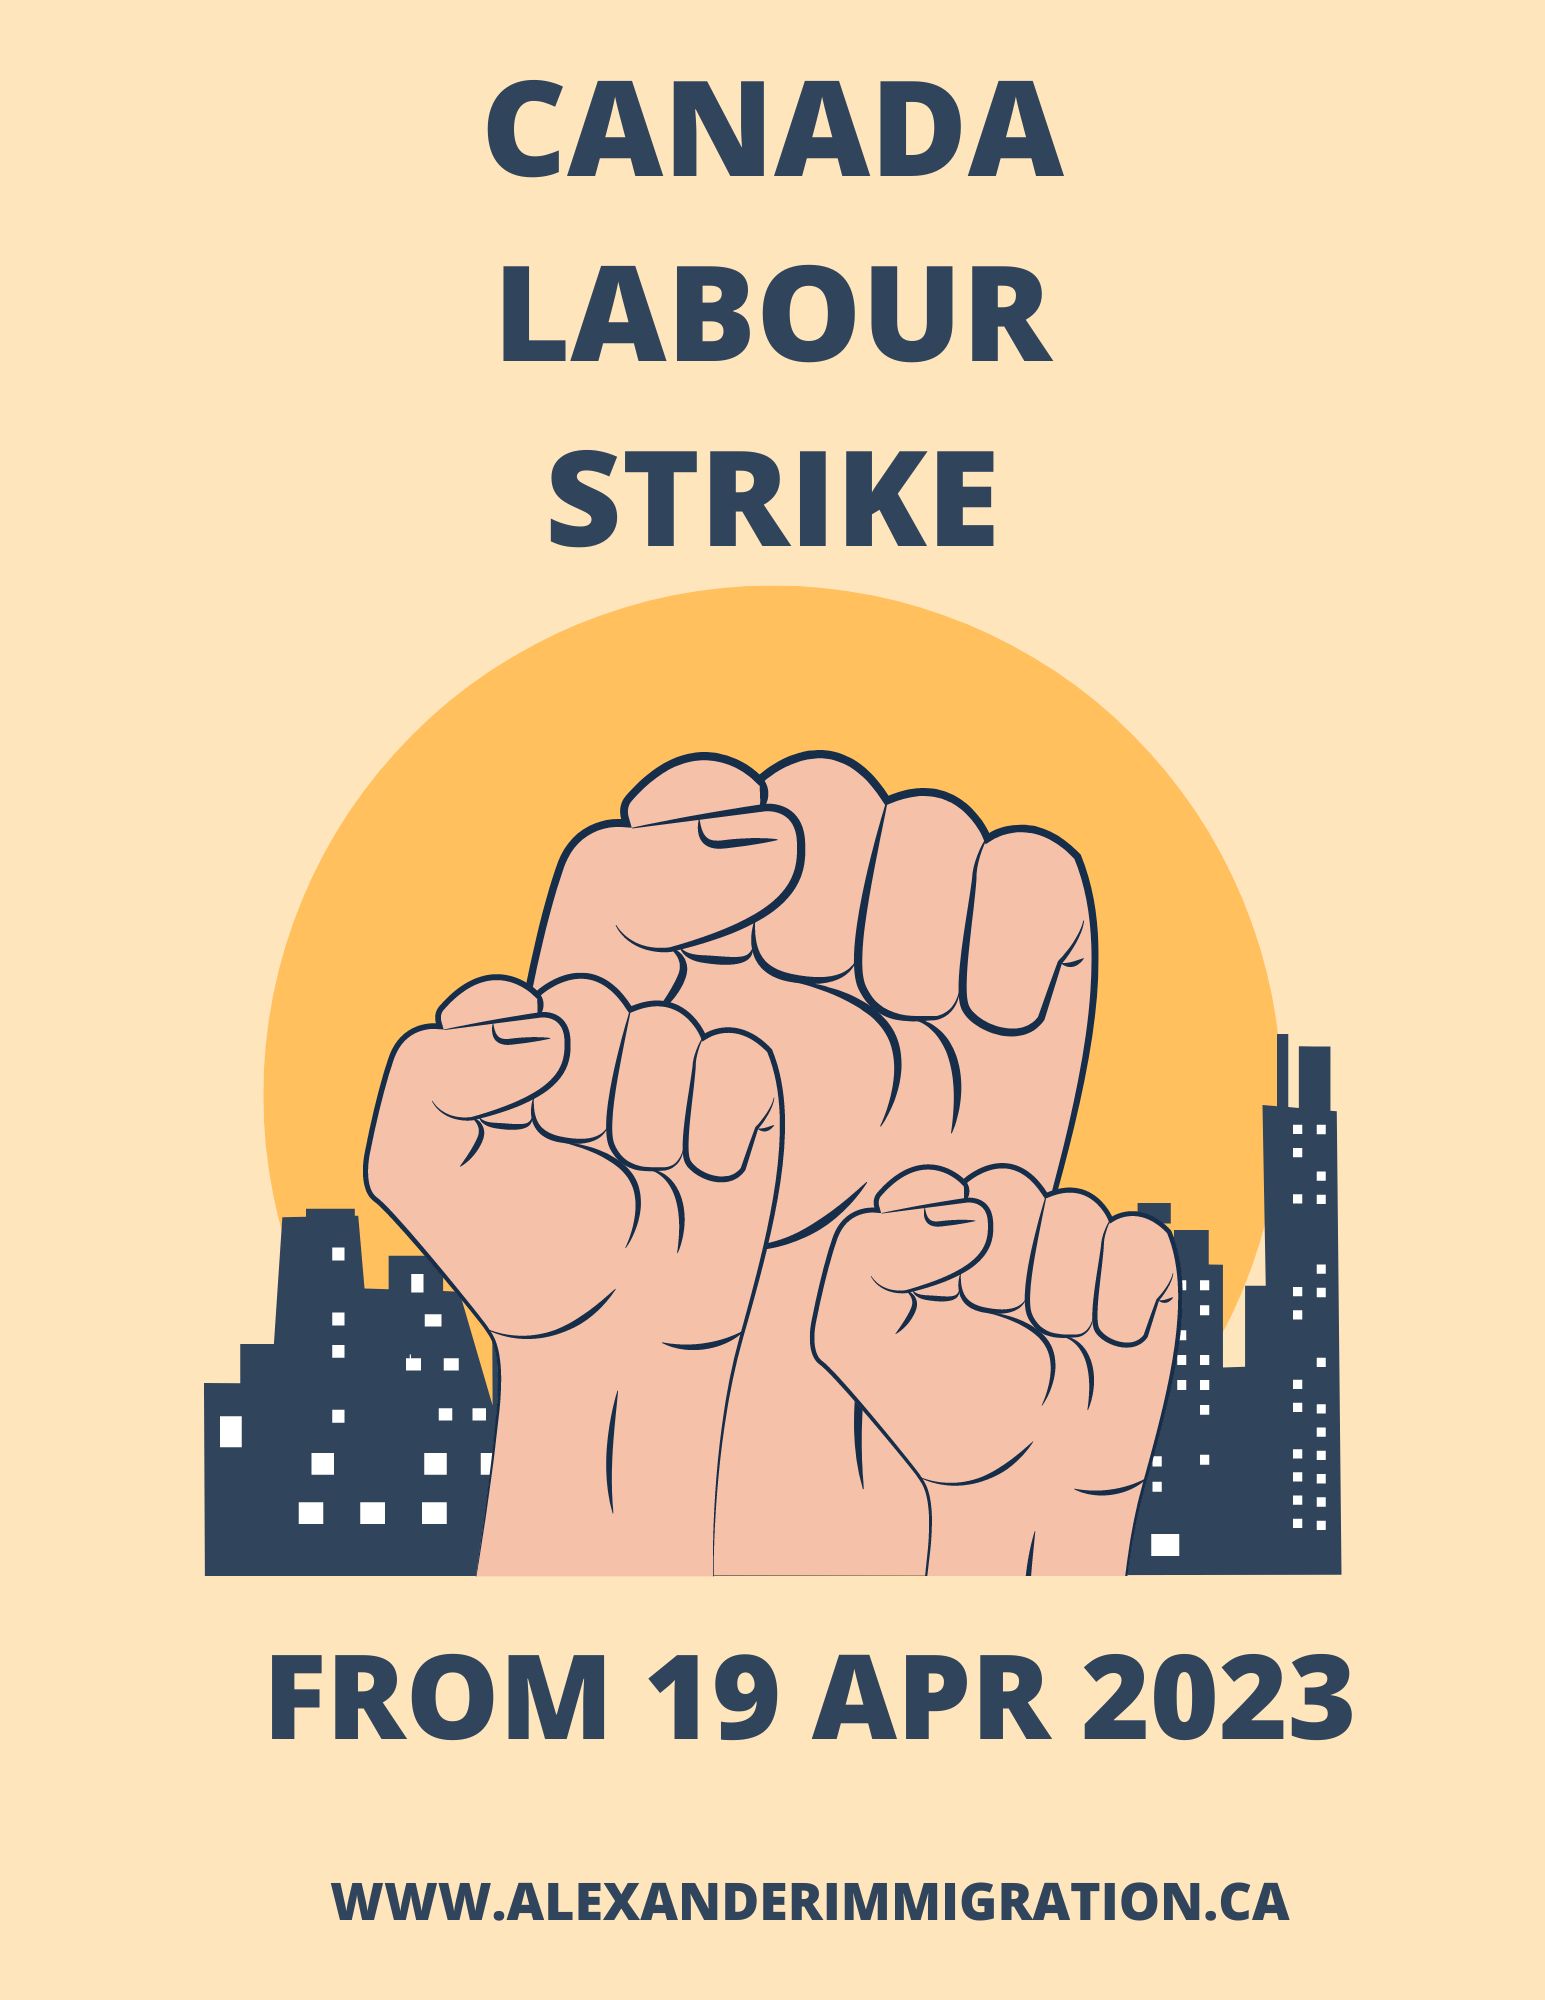 Canada Labour Strike effective 19 Apr 2023